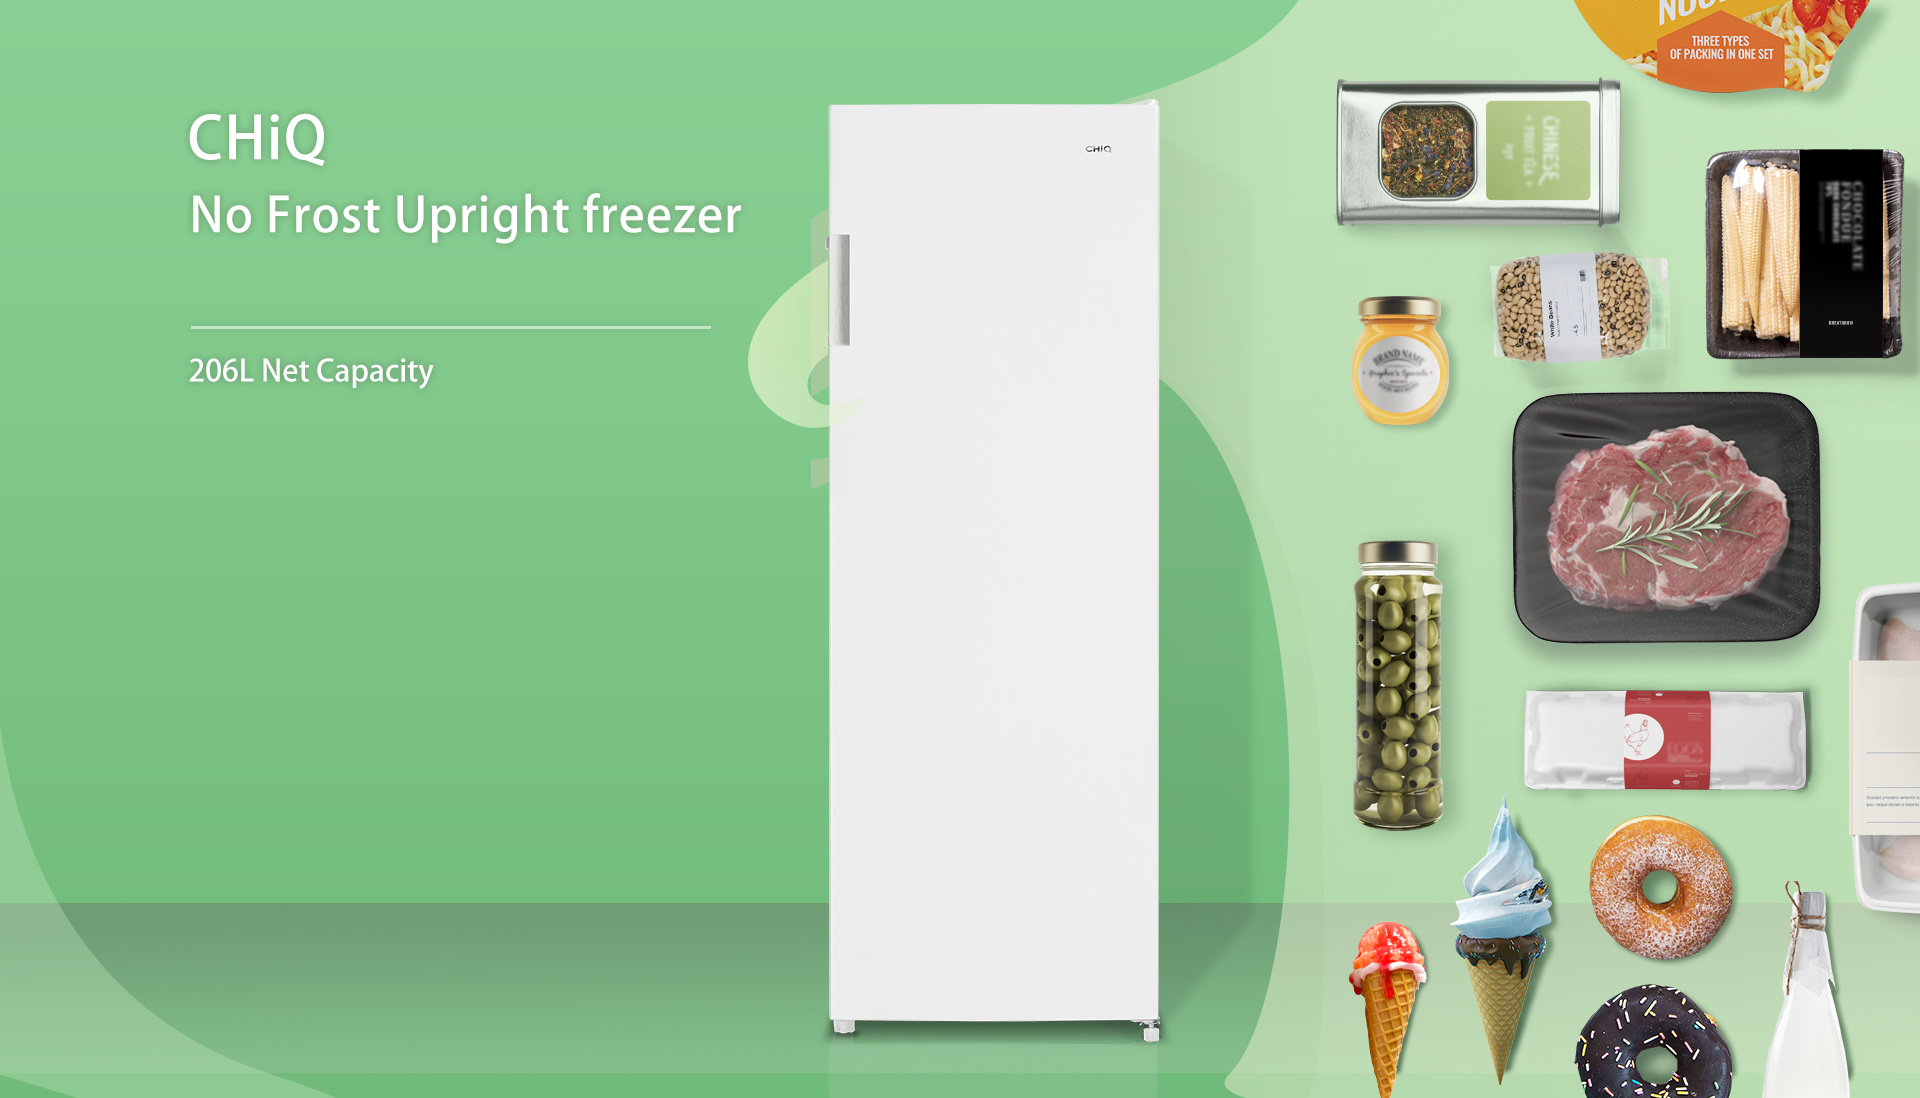 Brand New CHIQ CSF206NW 206L Frost Free Upright Freezer